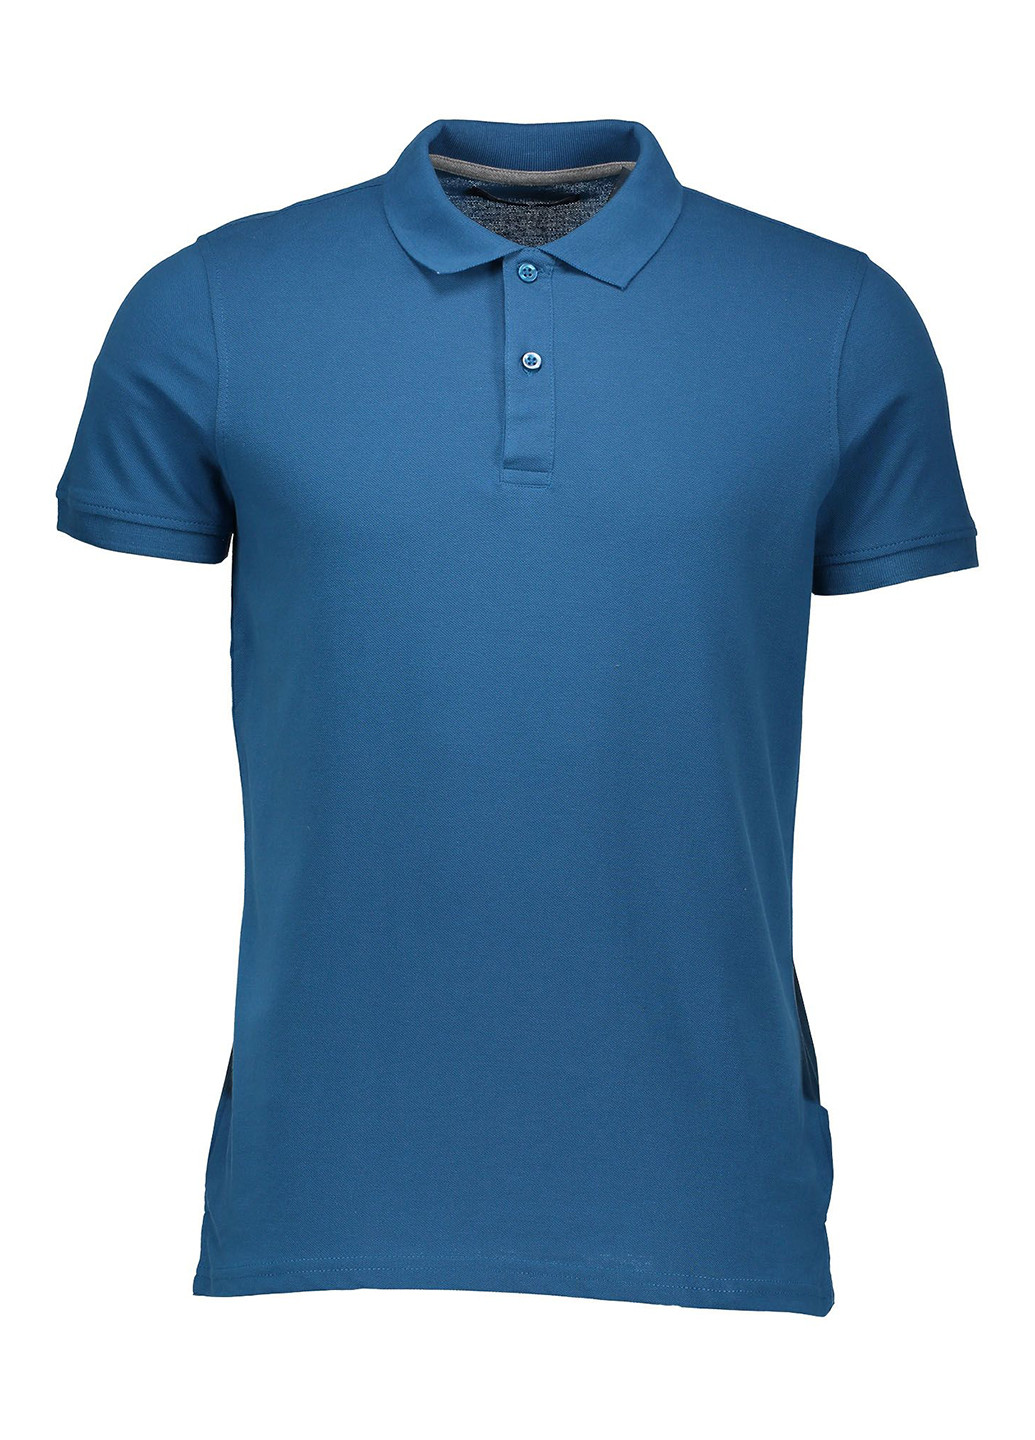 Светло-синяя футболка-поло для мужчин Piazza Italia однотонная